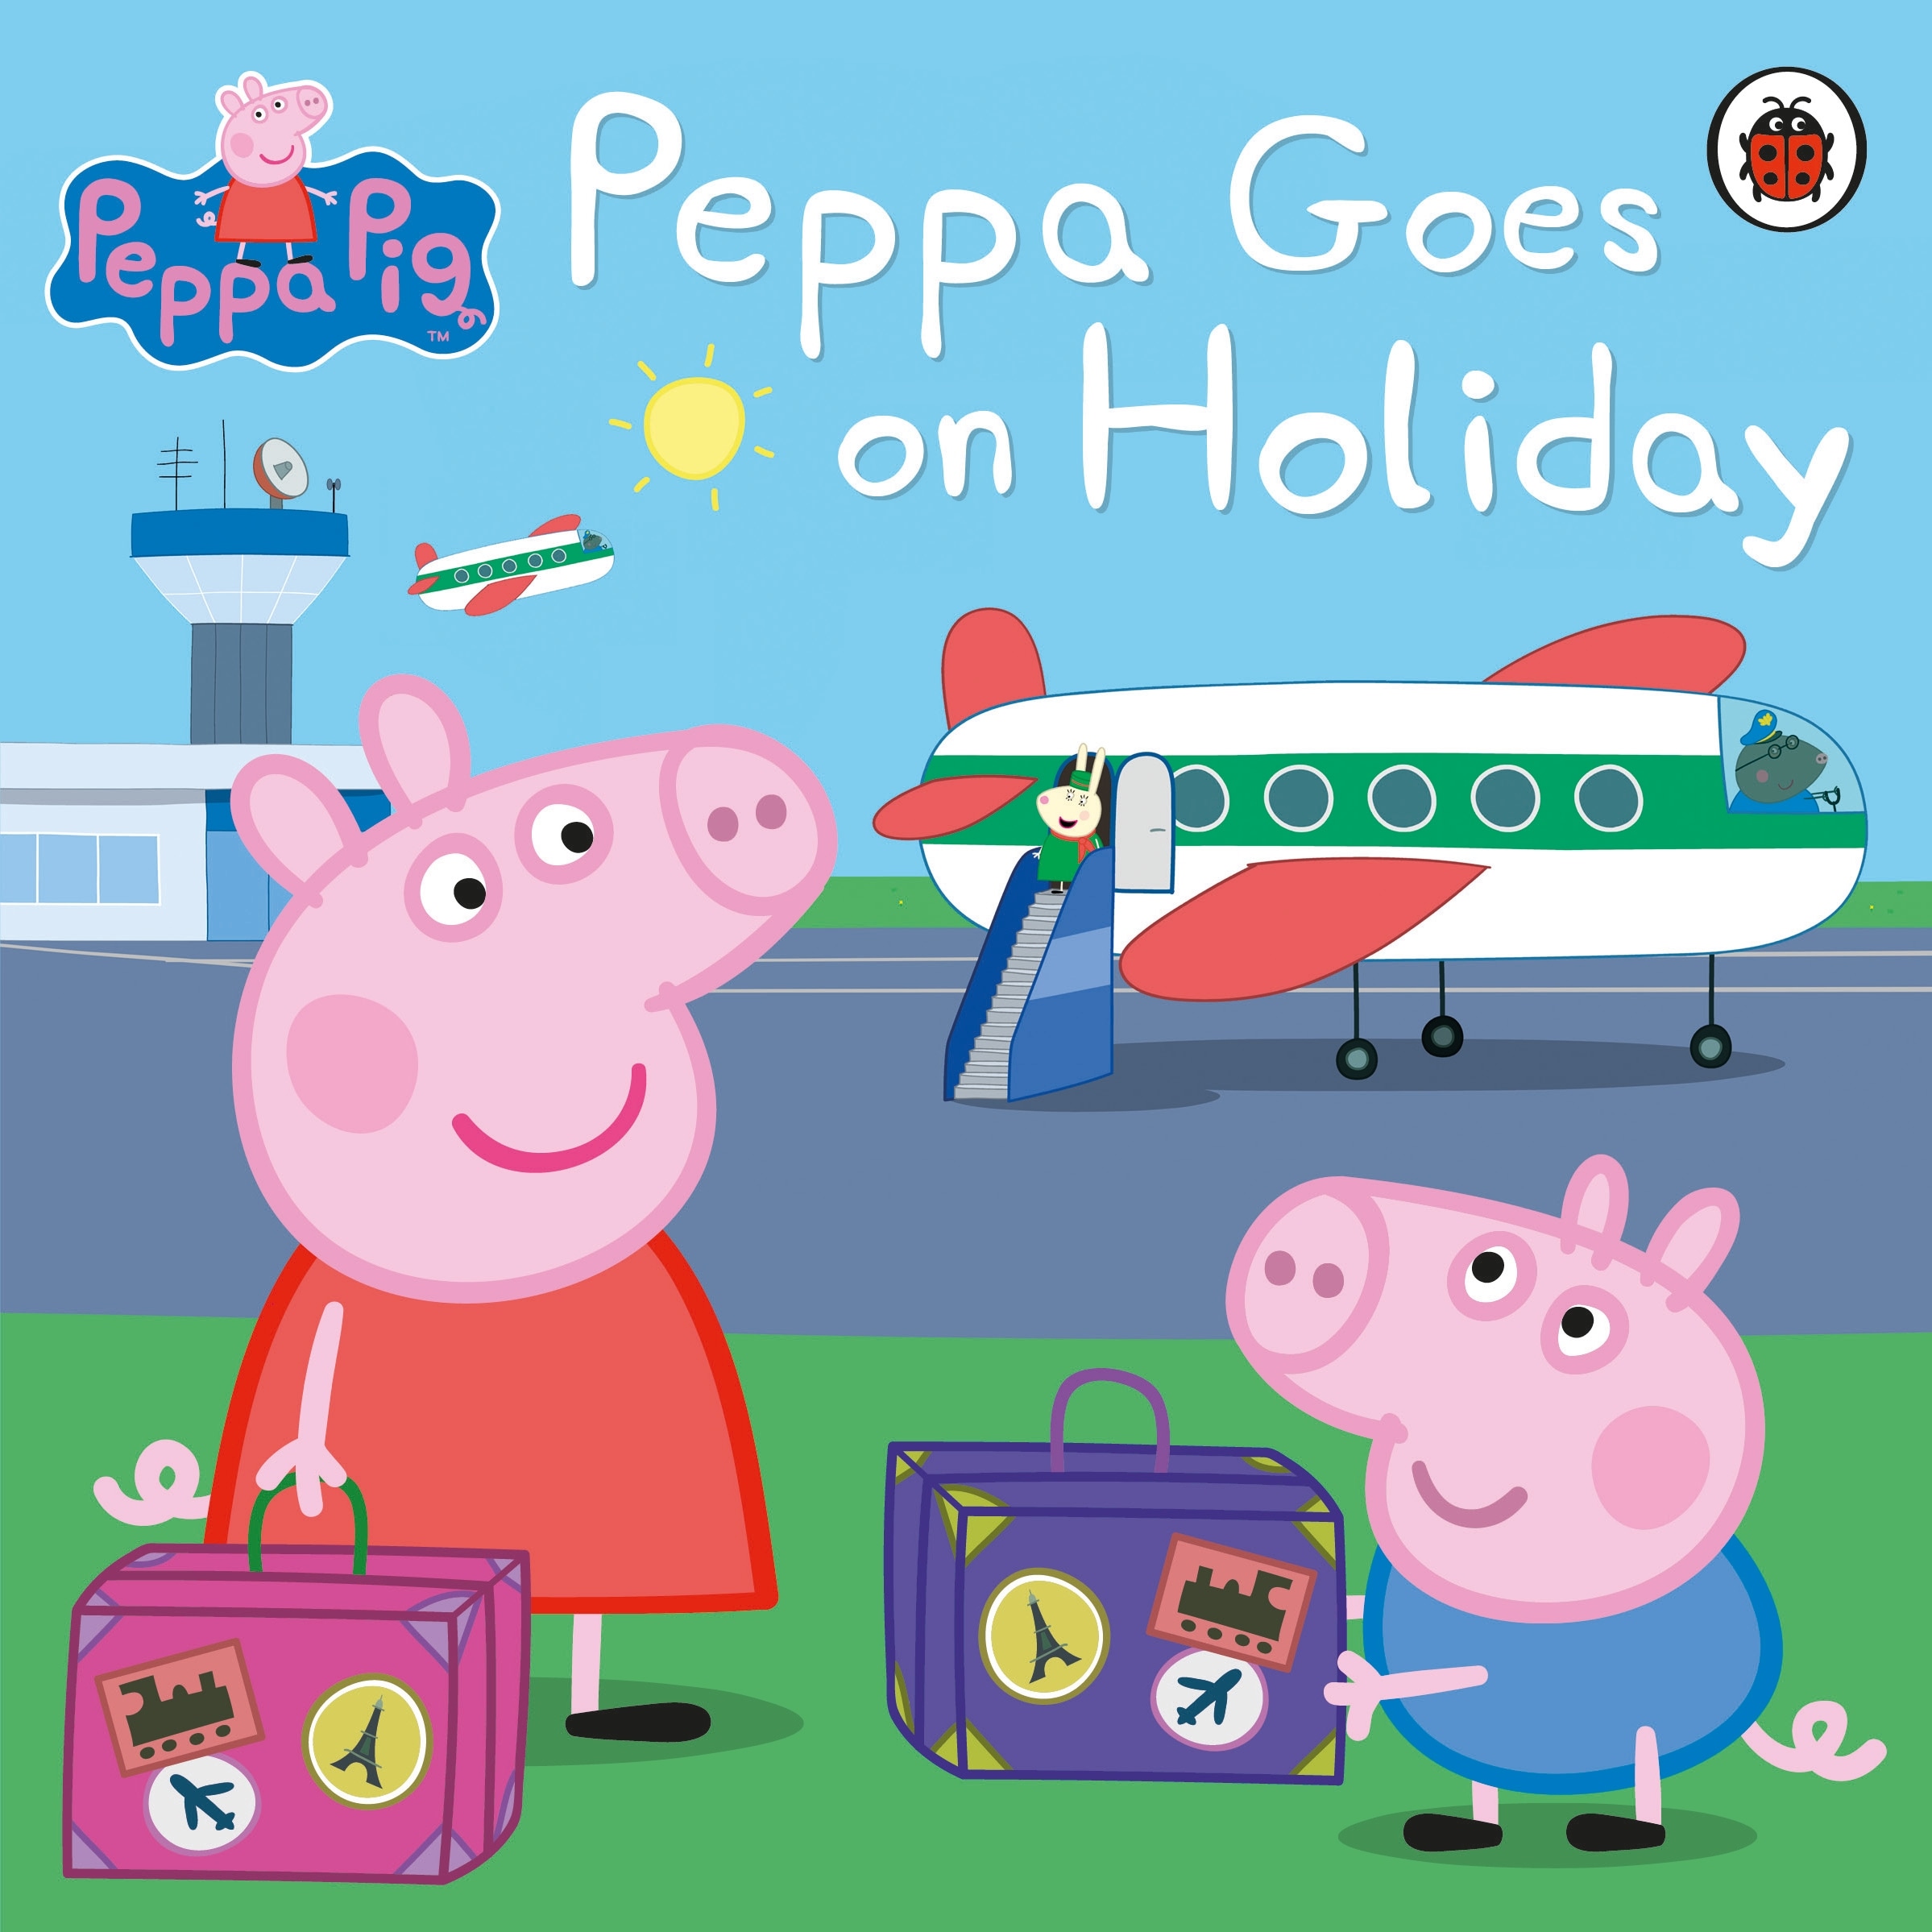 Book “Peppa Pig: Peppa Goes on Holiday” by Peppa Pig — June 4, 2015